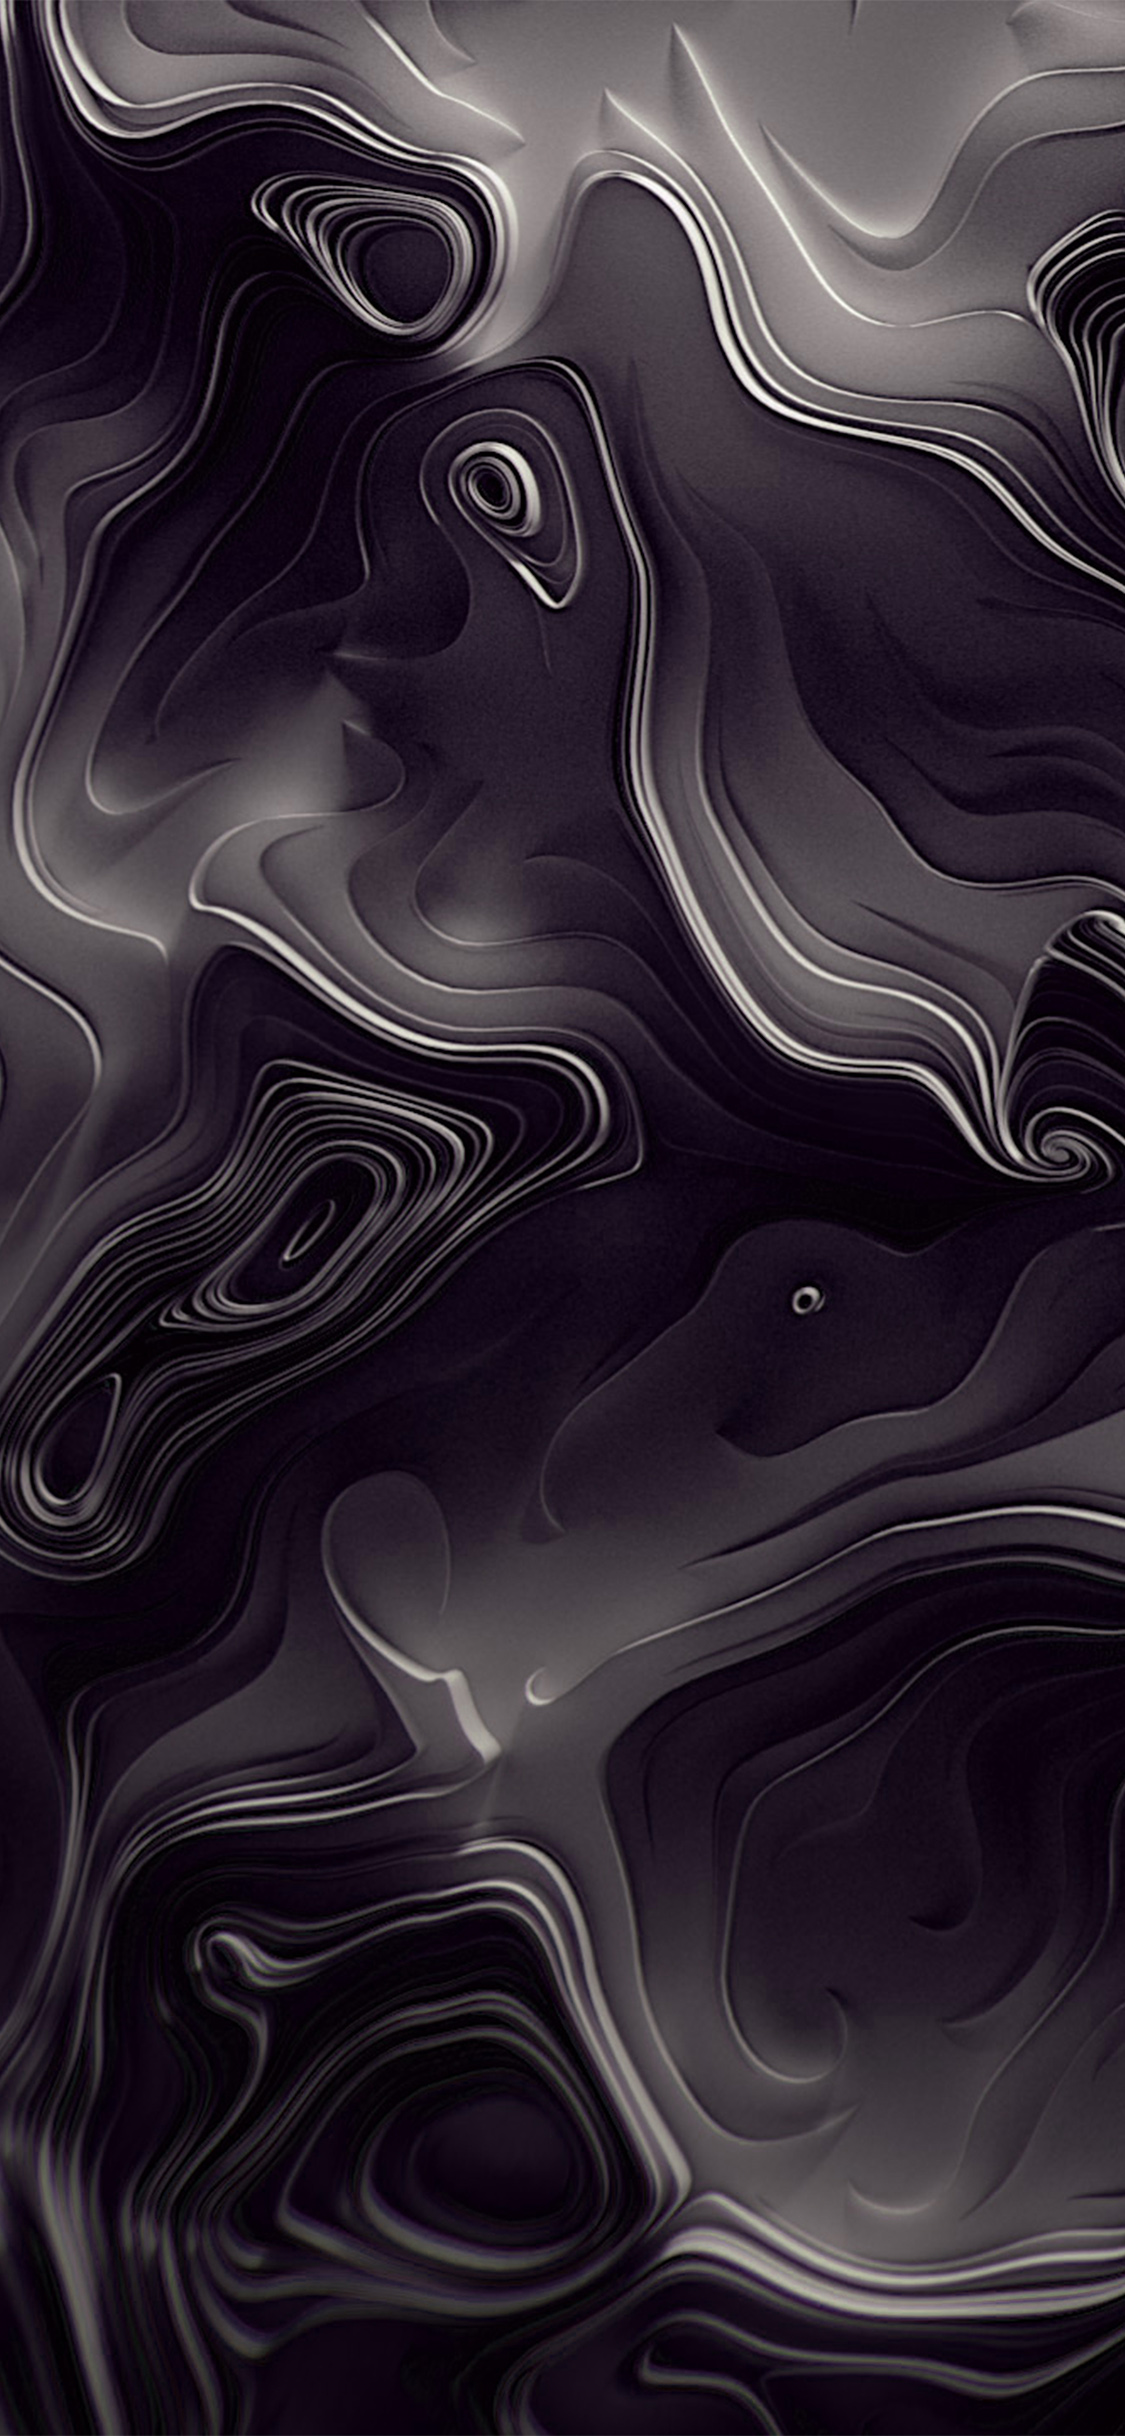 iPhone X wallpaper. map curves dark pattern background